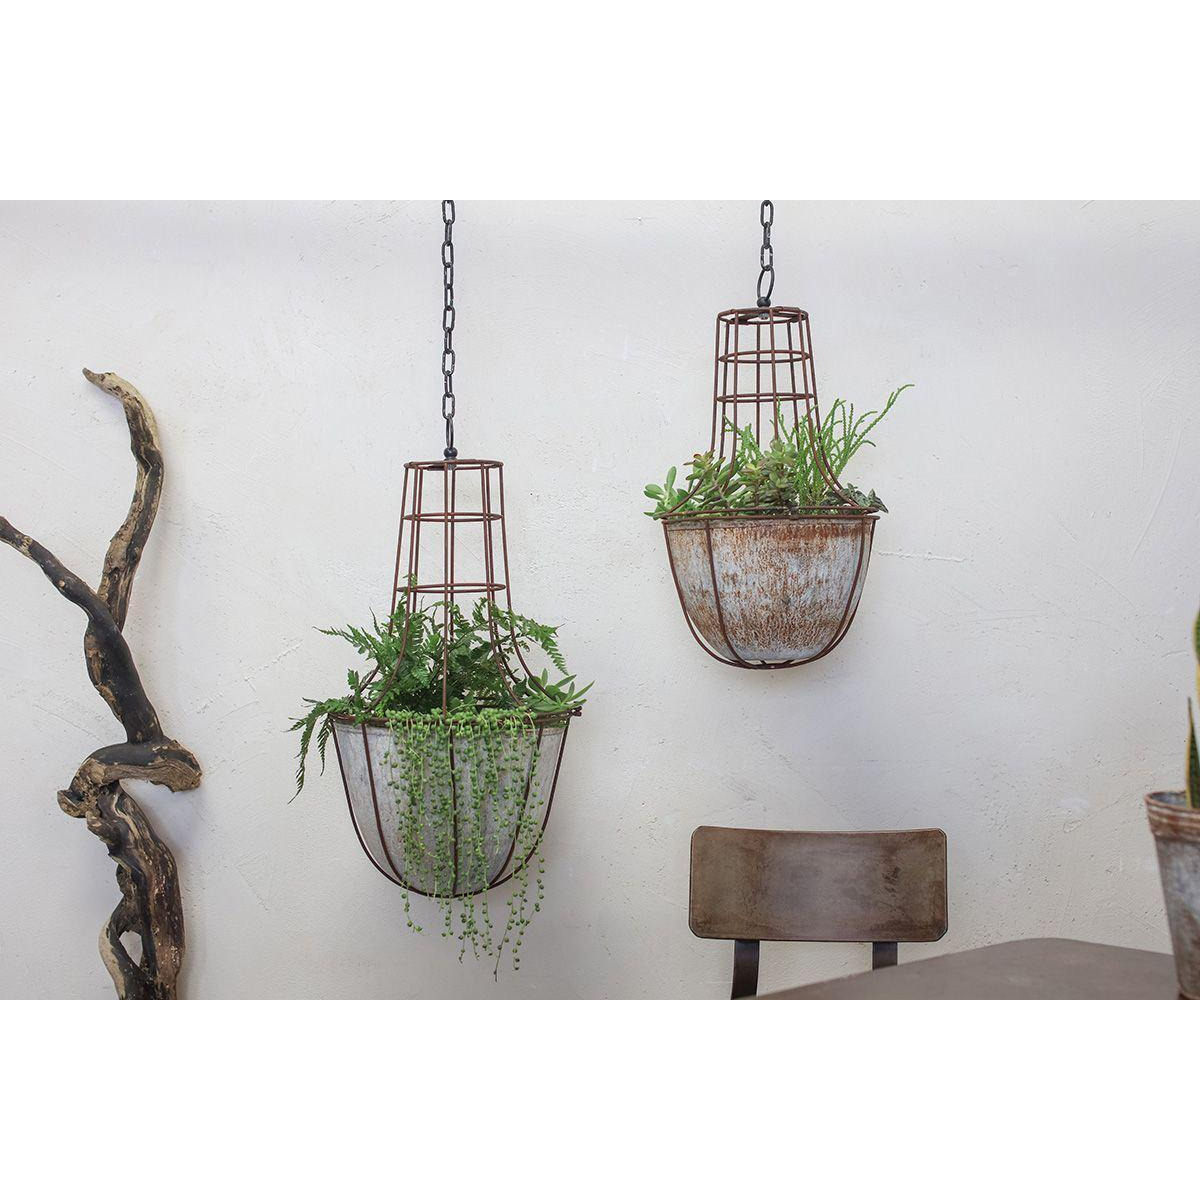 nkuku Abari Caged Hanging Planter - Vases & Planters - Grey - Small 43 x 28 cm (Diameter)